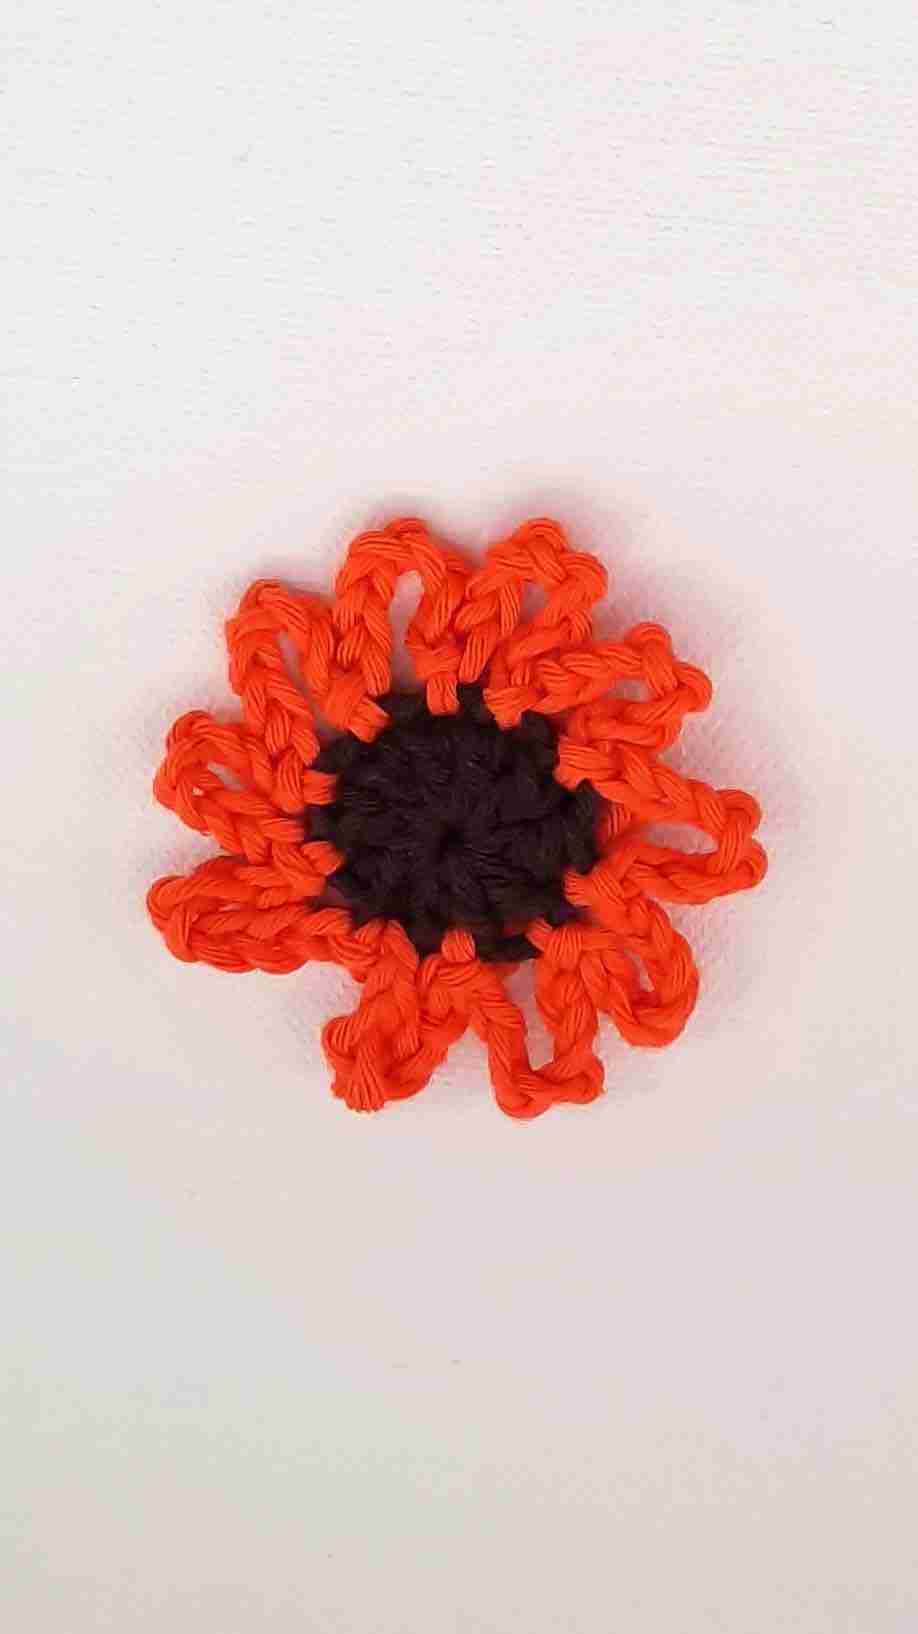 Mini sunflower crochet pattern